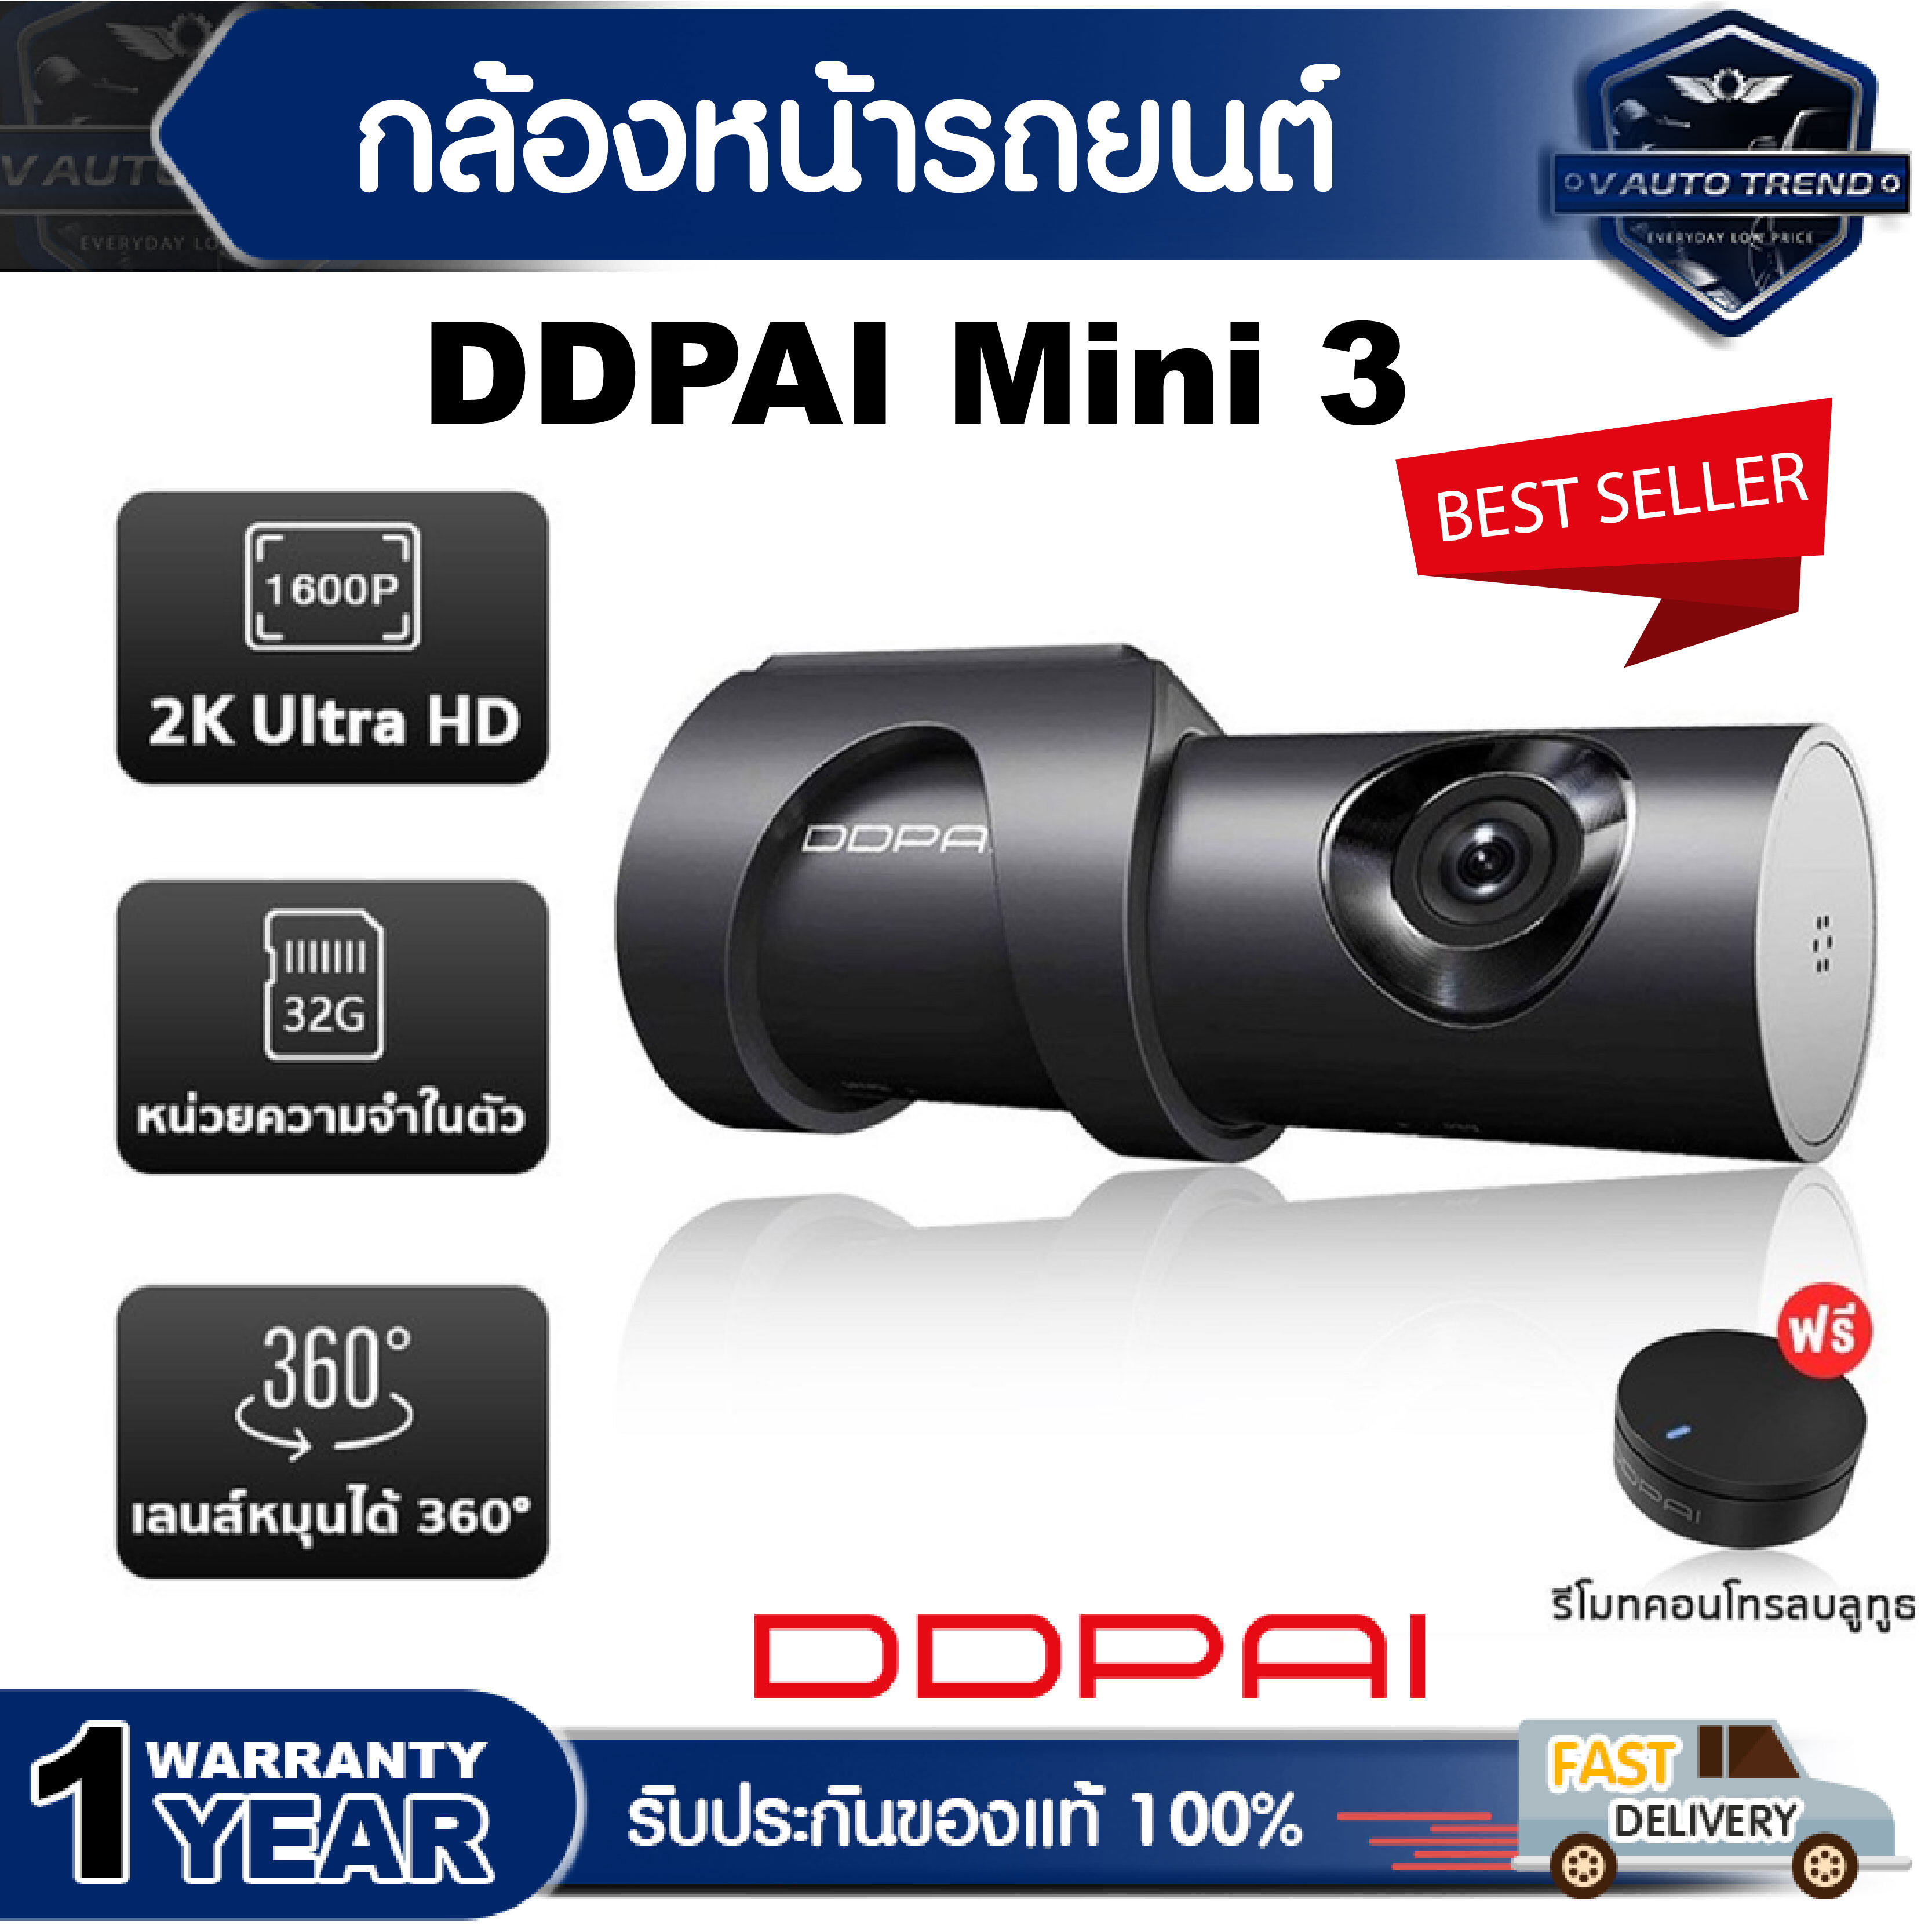 DDPai Mini3 Dash Cam 1600P HD Built-in กล้องติดรถยนต์ มาพร้อมหน่วยความจำ 32GB ในตัว คมชัด2K+(1600P) ดีไซน์สวย กล้องรถยนต์ ความละเอียดสูง กล้อง กล้องติดรถยนต์